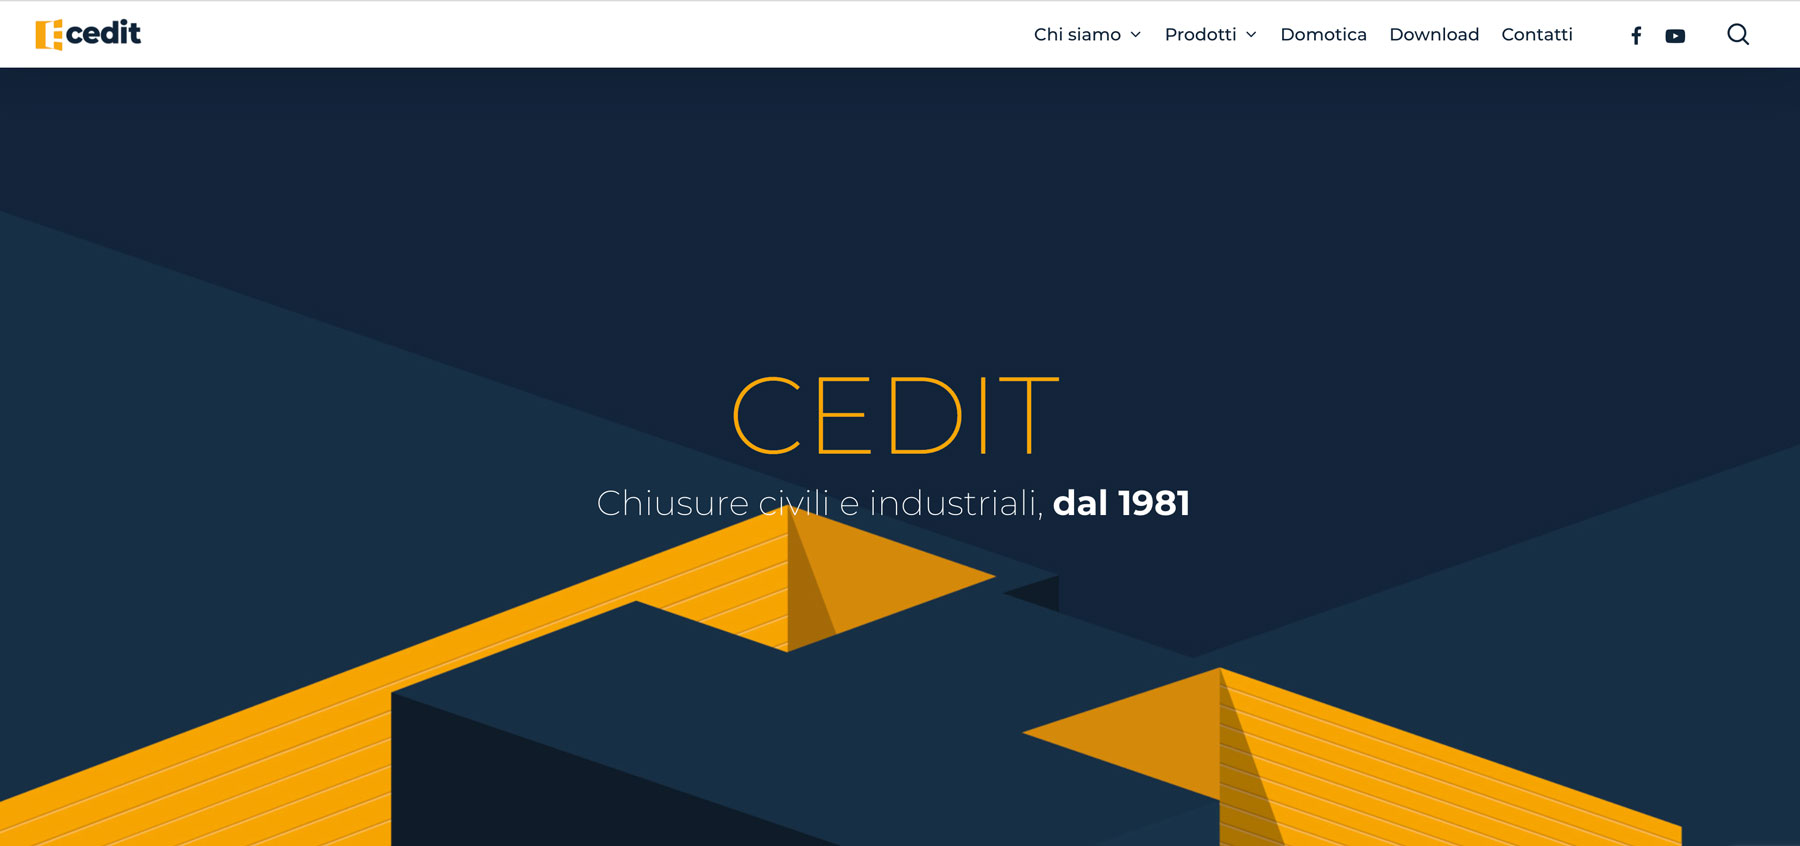 Cedit Website web